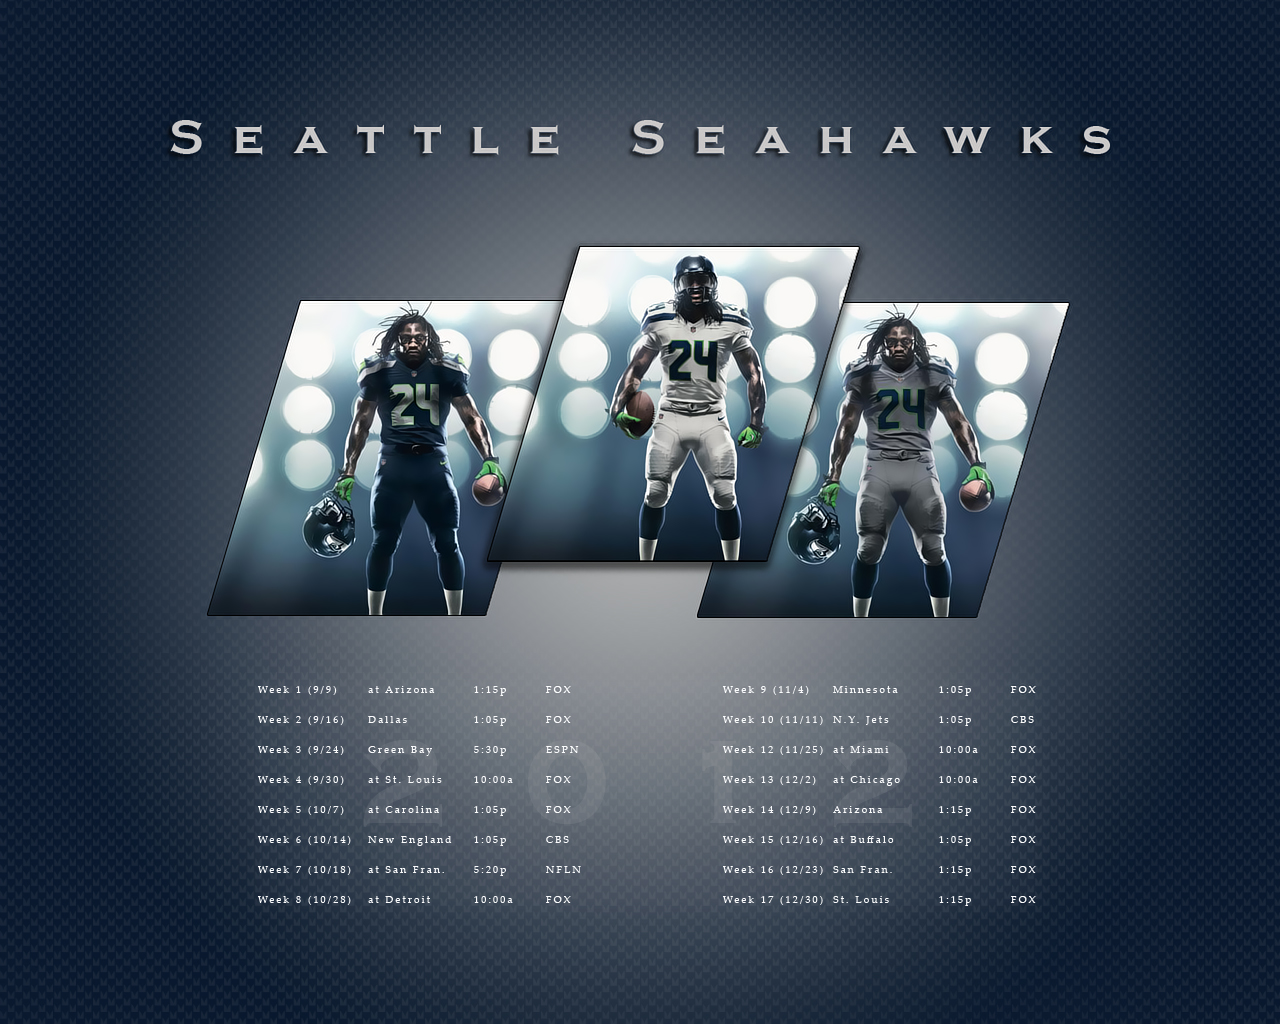 Seahawks 2016 2016 Schedule